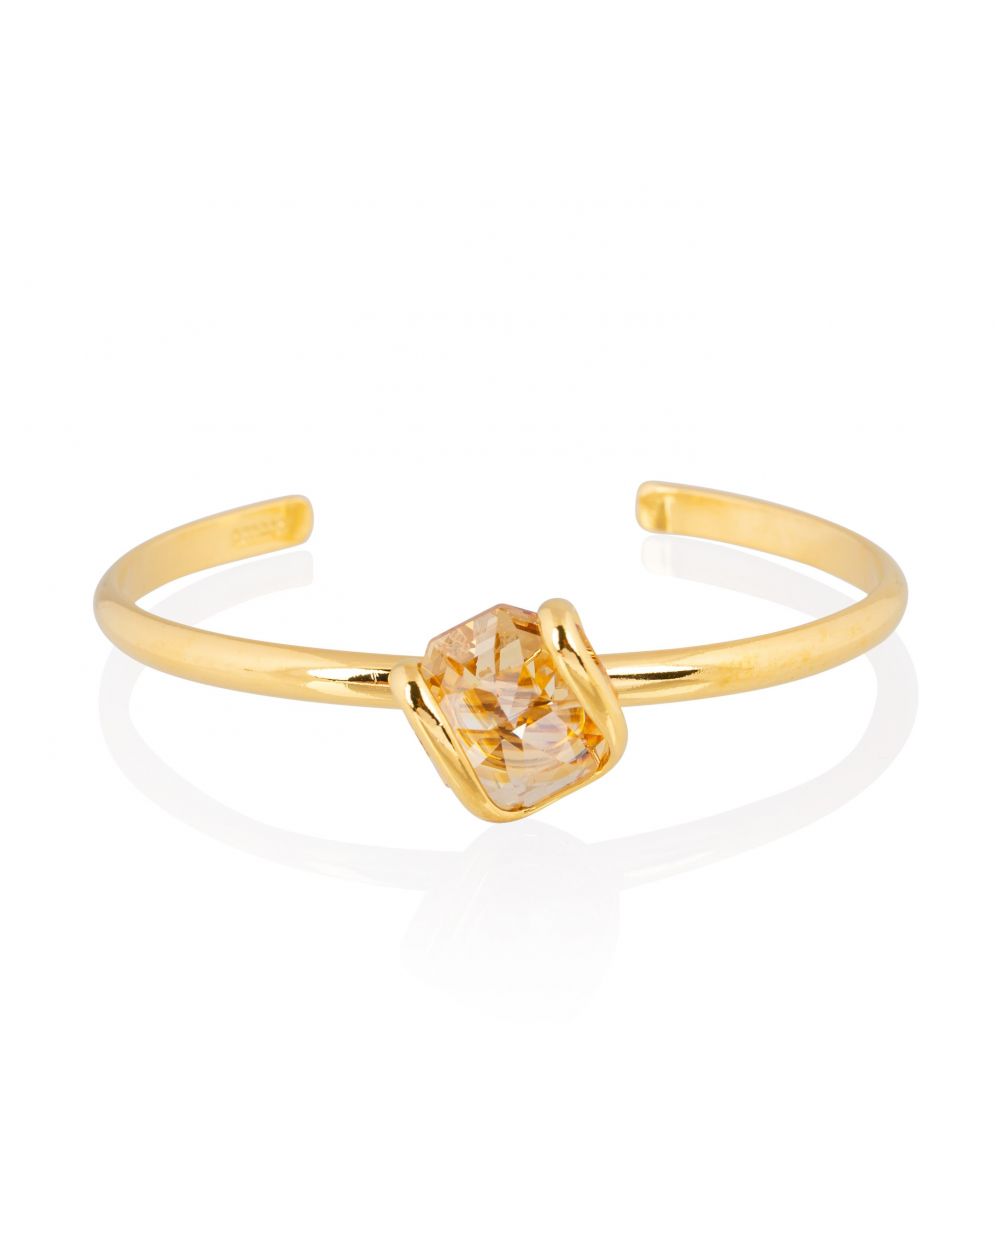 Andrea Marazzini bijoux - Bracelet cristal Swarovski Golden Shadow